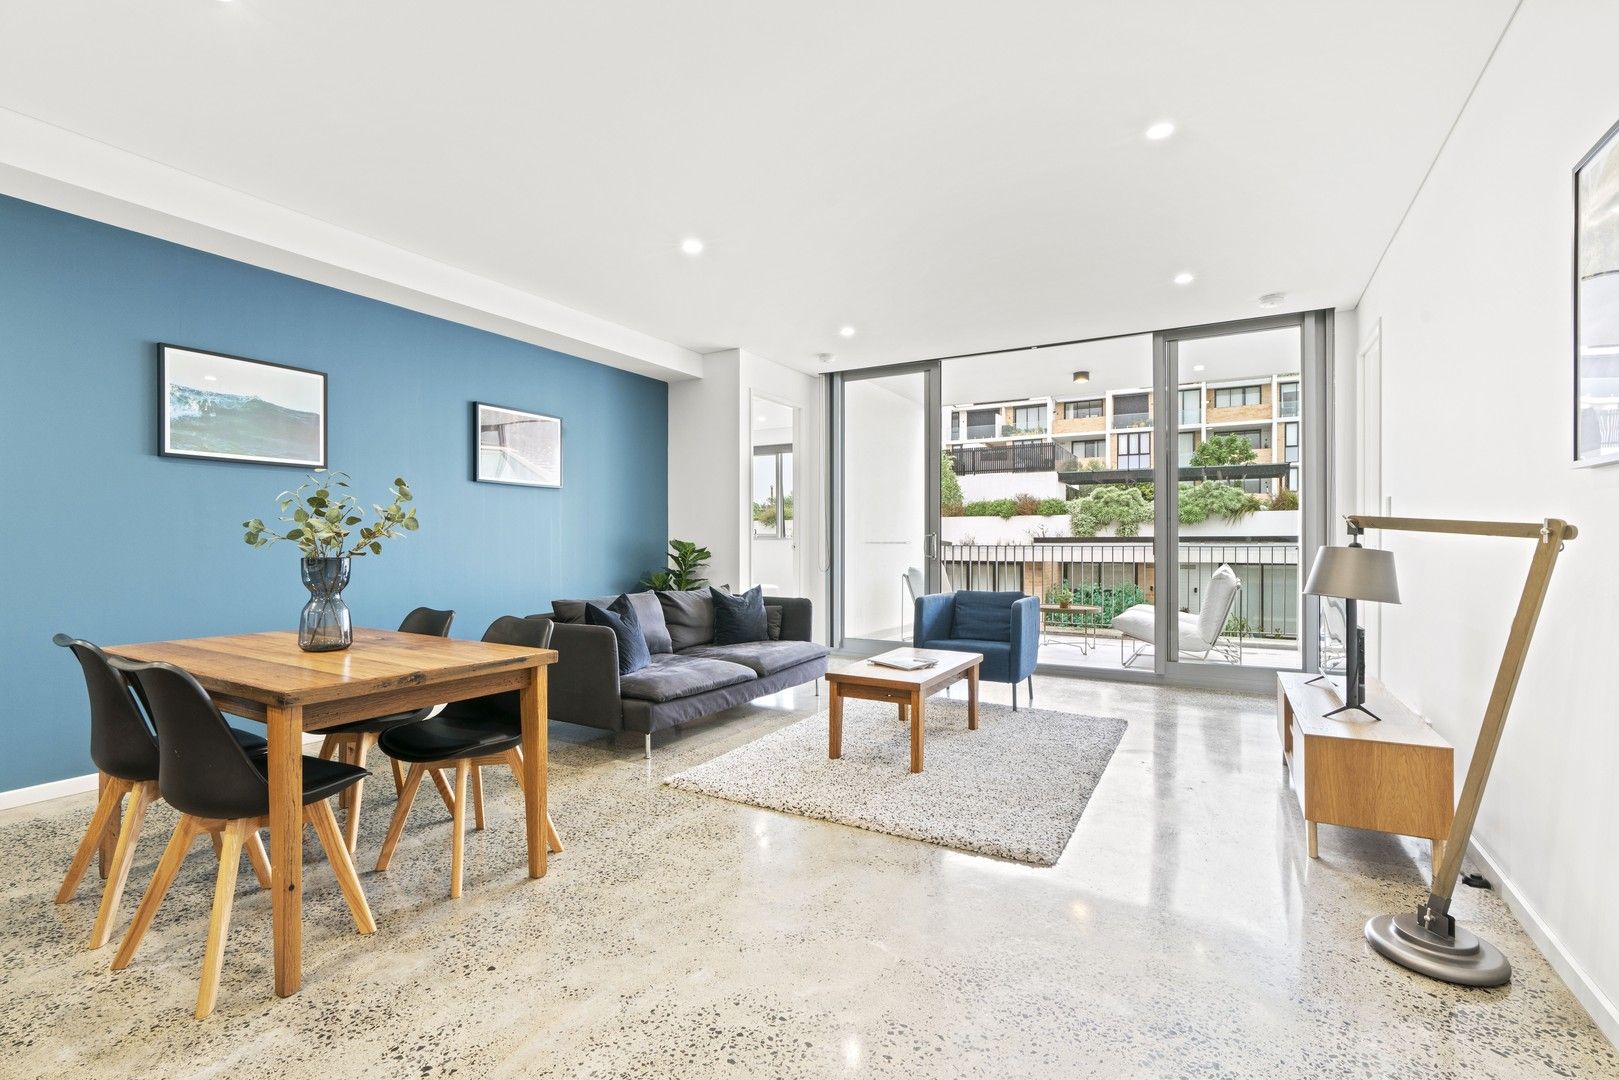 2 bedrooms Apartment / Unit / Flat in 310, 29/310, 29 Applebee St ST PETERS NSW, 2044